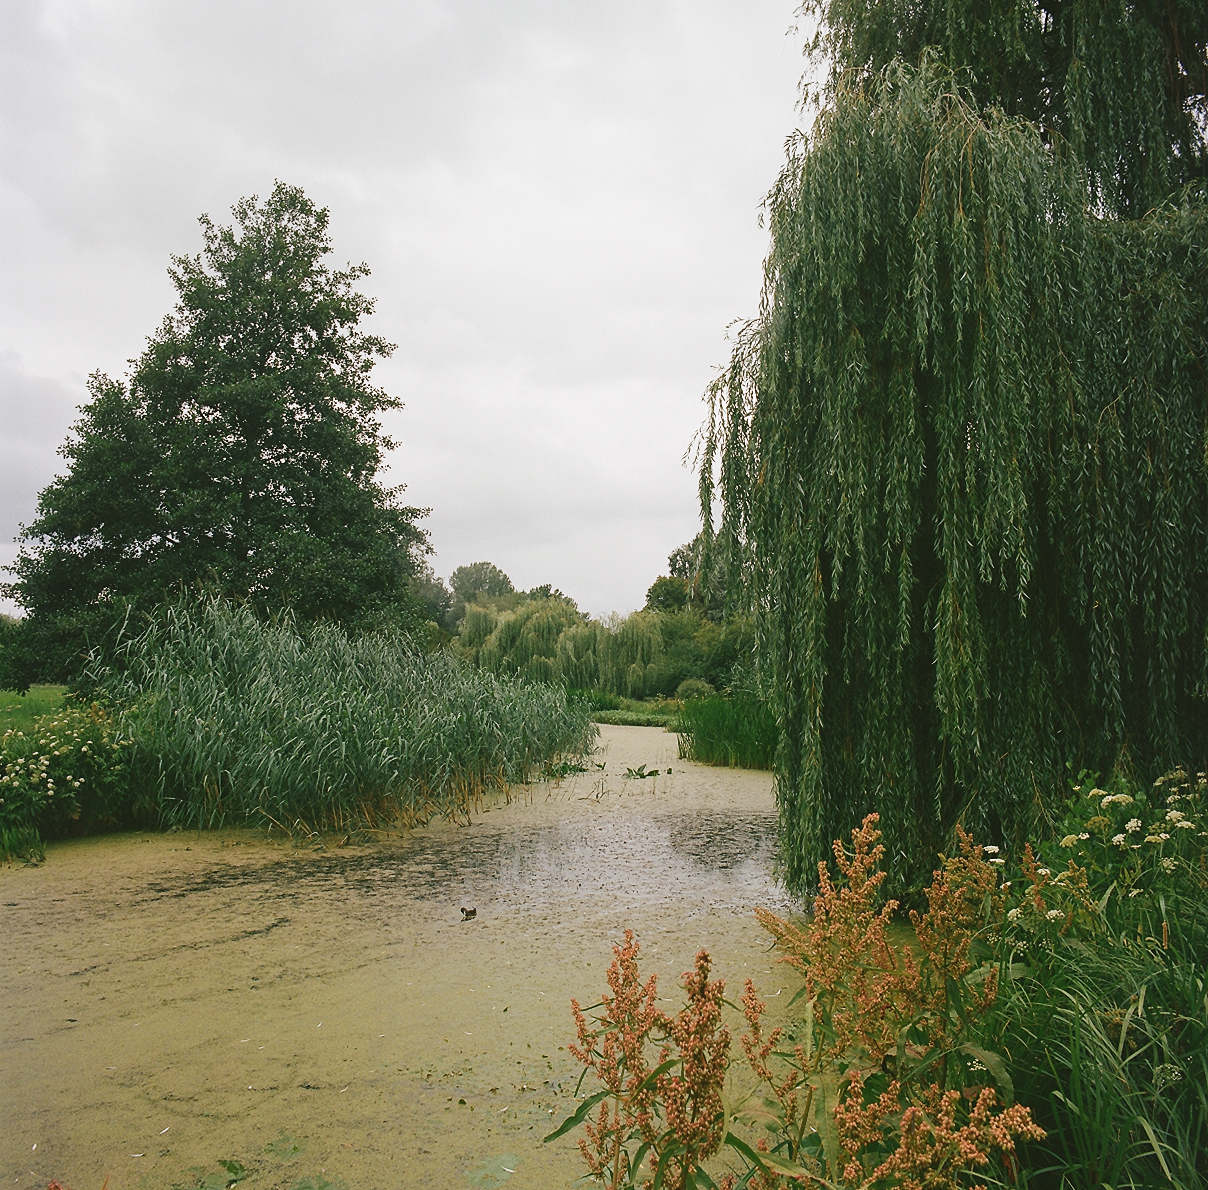 The canals on Kamionkowskie Błonia Elekcyjne, with their lush aquatic and swamp greenery, require seasonal gardening.